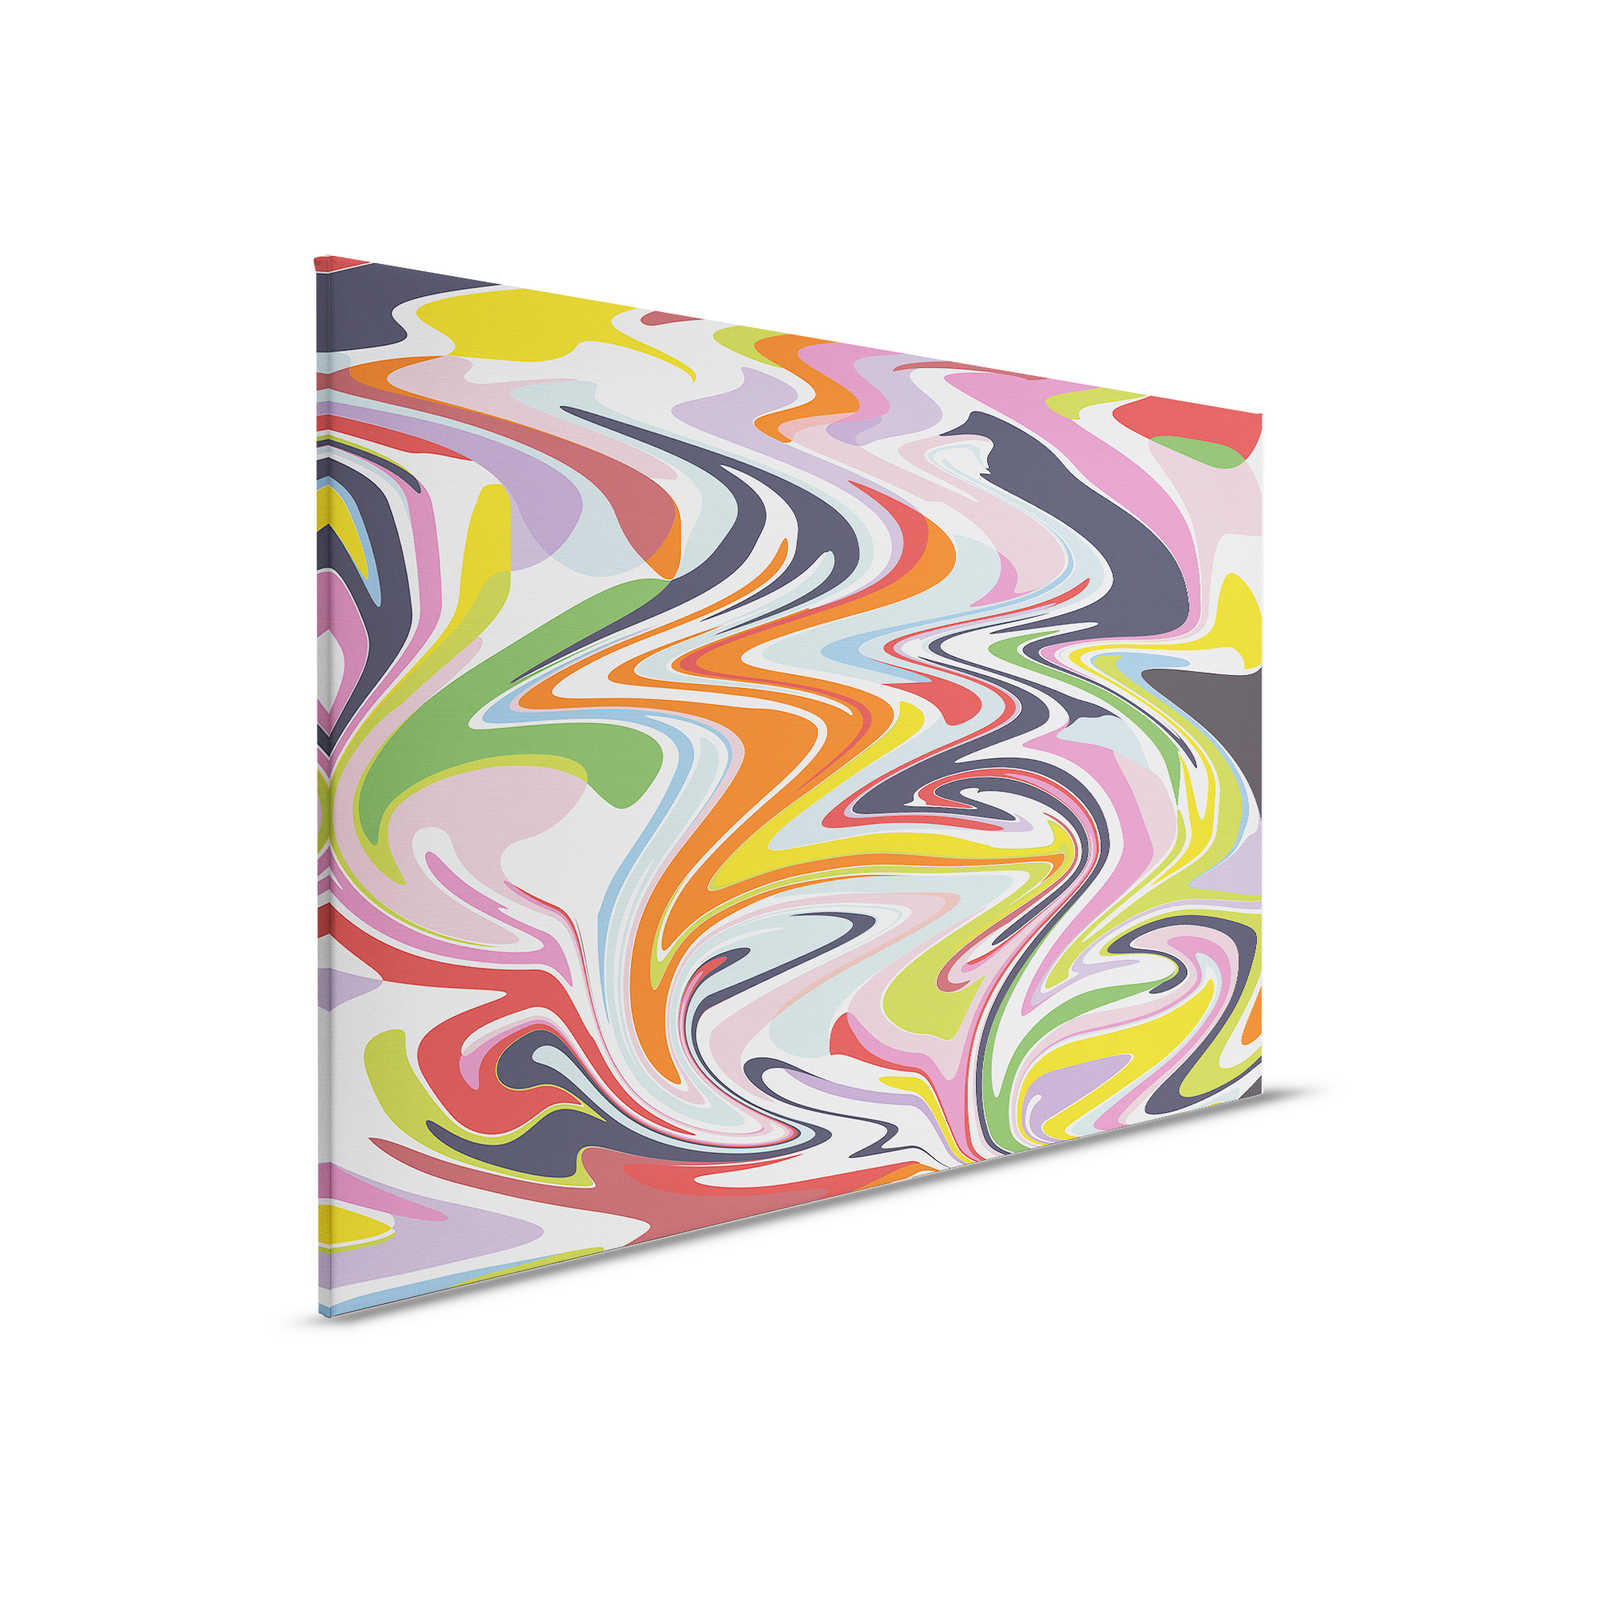         Leinwandbild abstraktes Farbgemisch buntes Muster – 0,90 m x 0,60 m
    